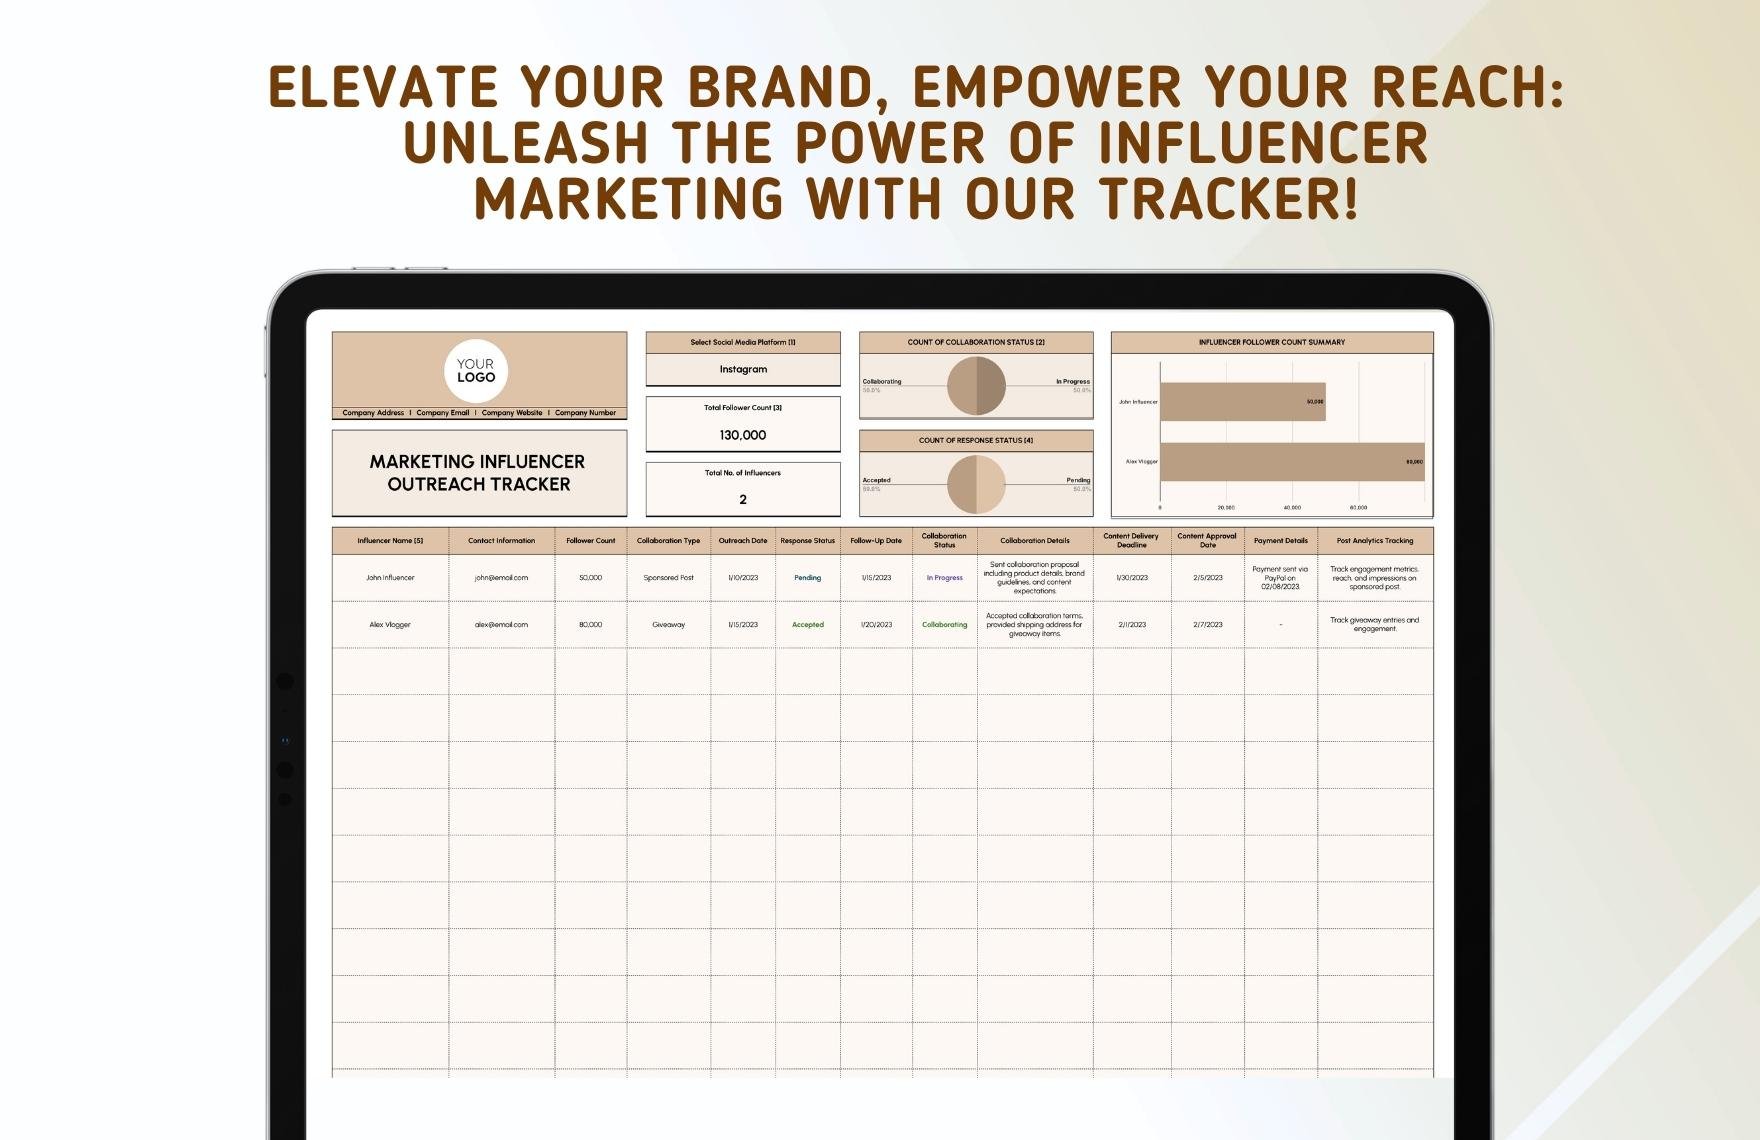 Marketing Influencer Outreach Tracker Template